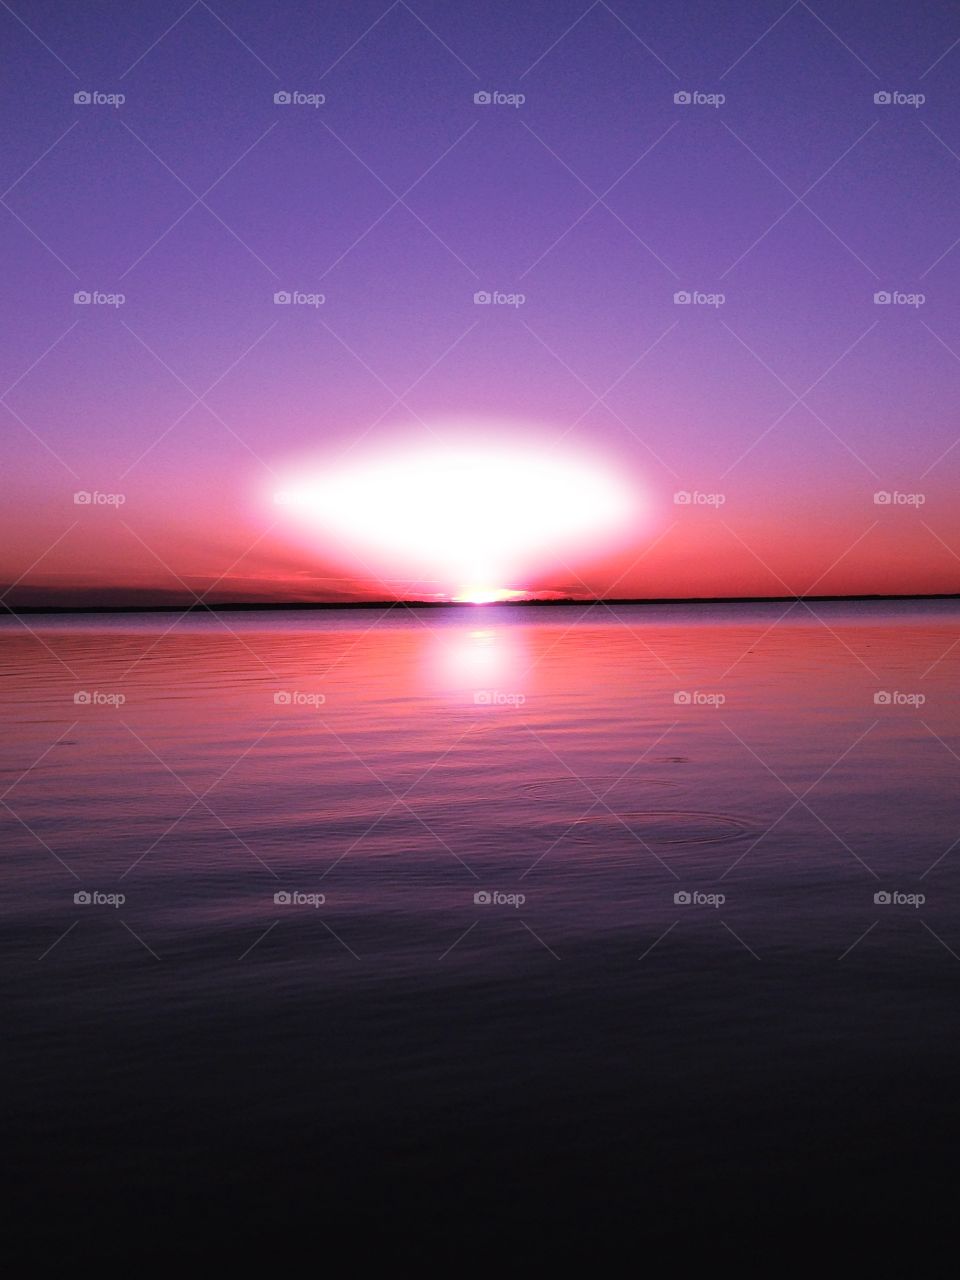 Pink/purple sunset